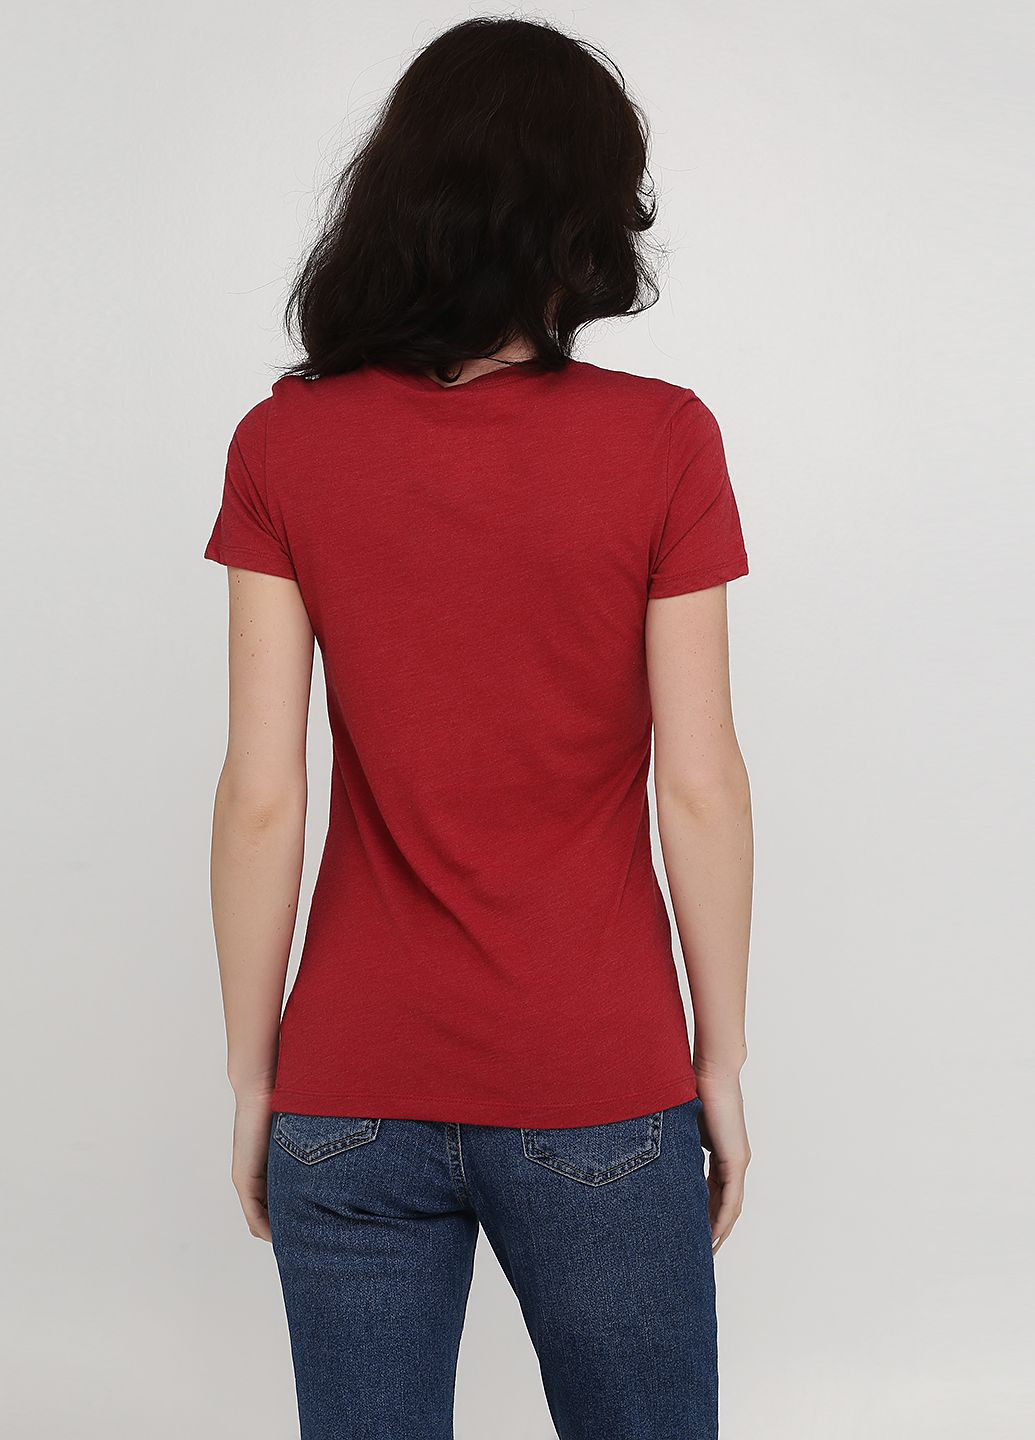 Красная летняя красная футболка - женская футболка a0159w Aeropostale